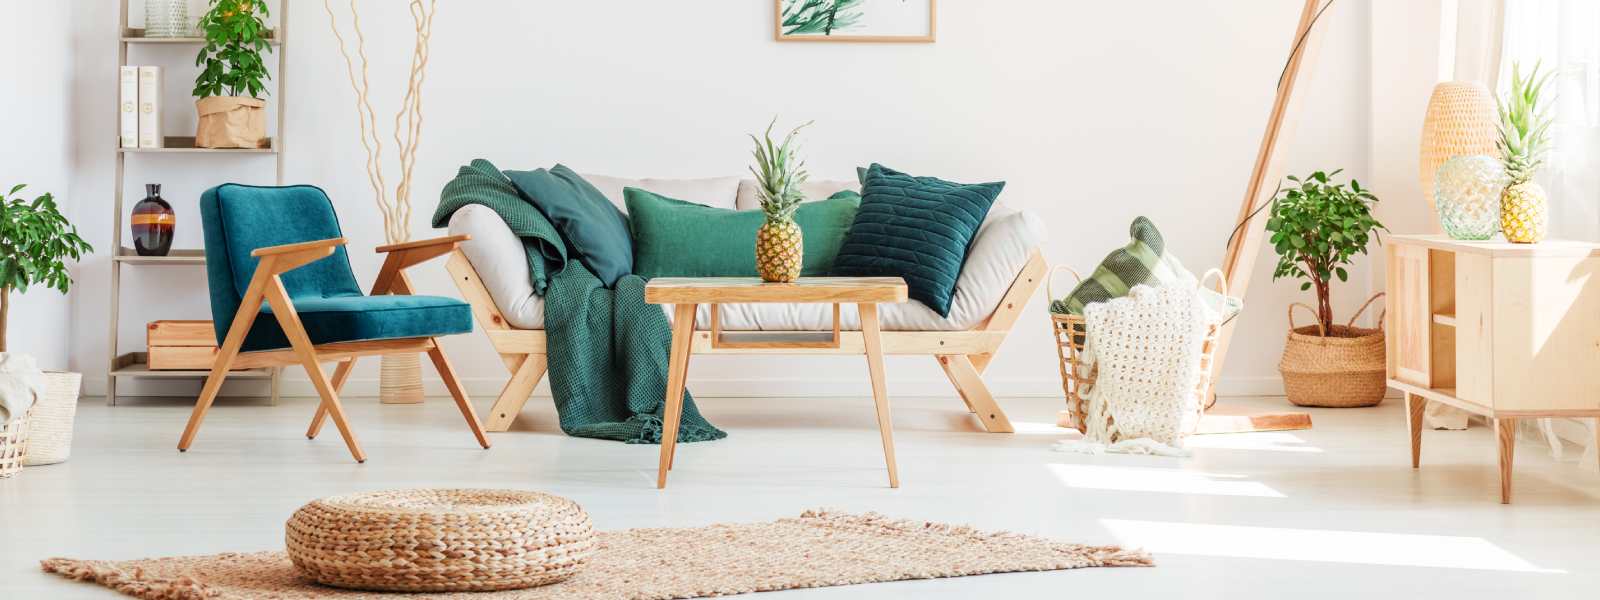 Salon avec mobilier vert